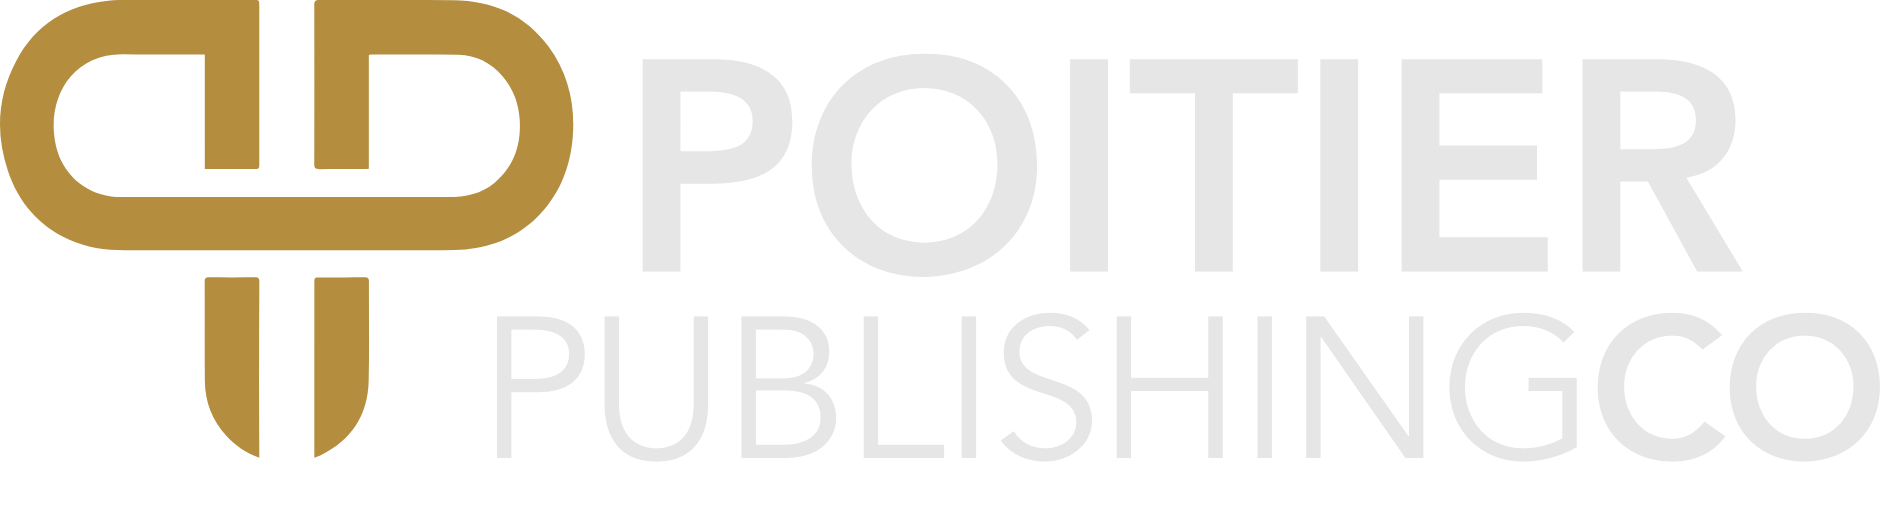 Poitier Publishing Company